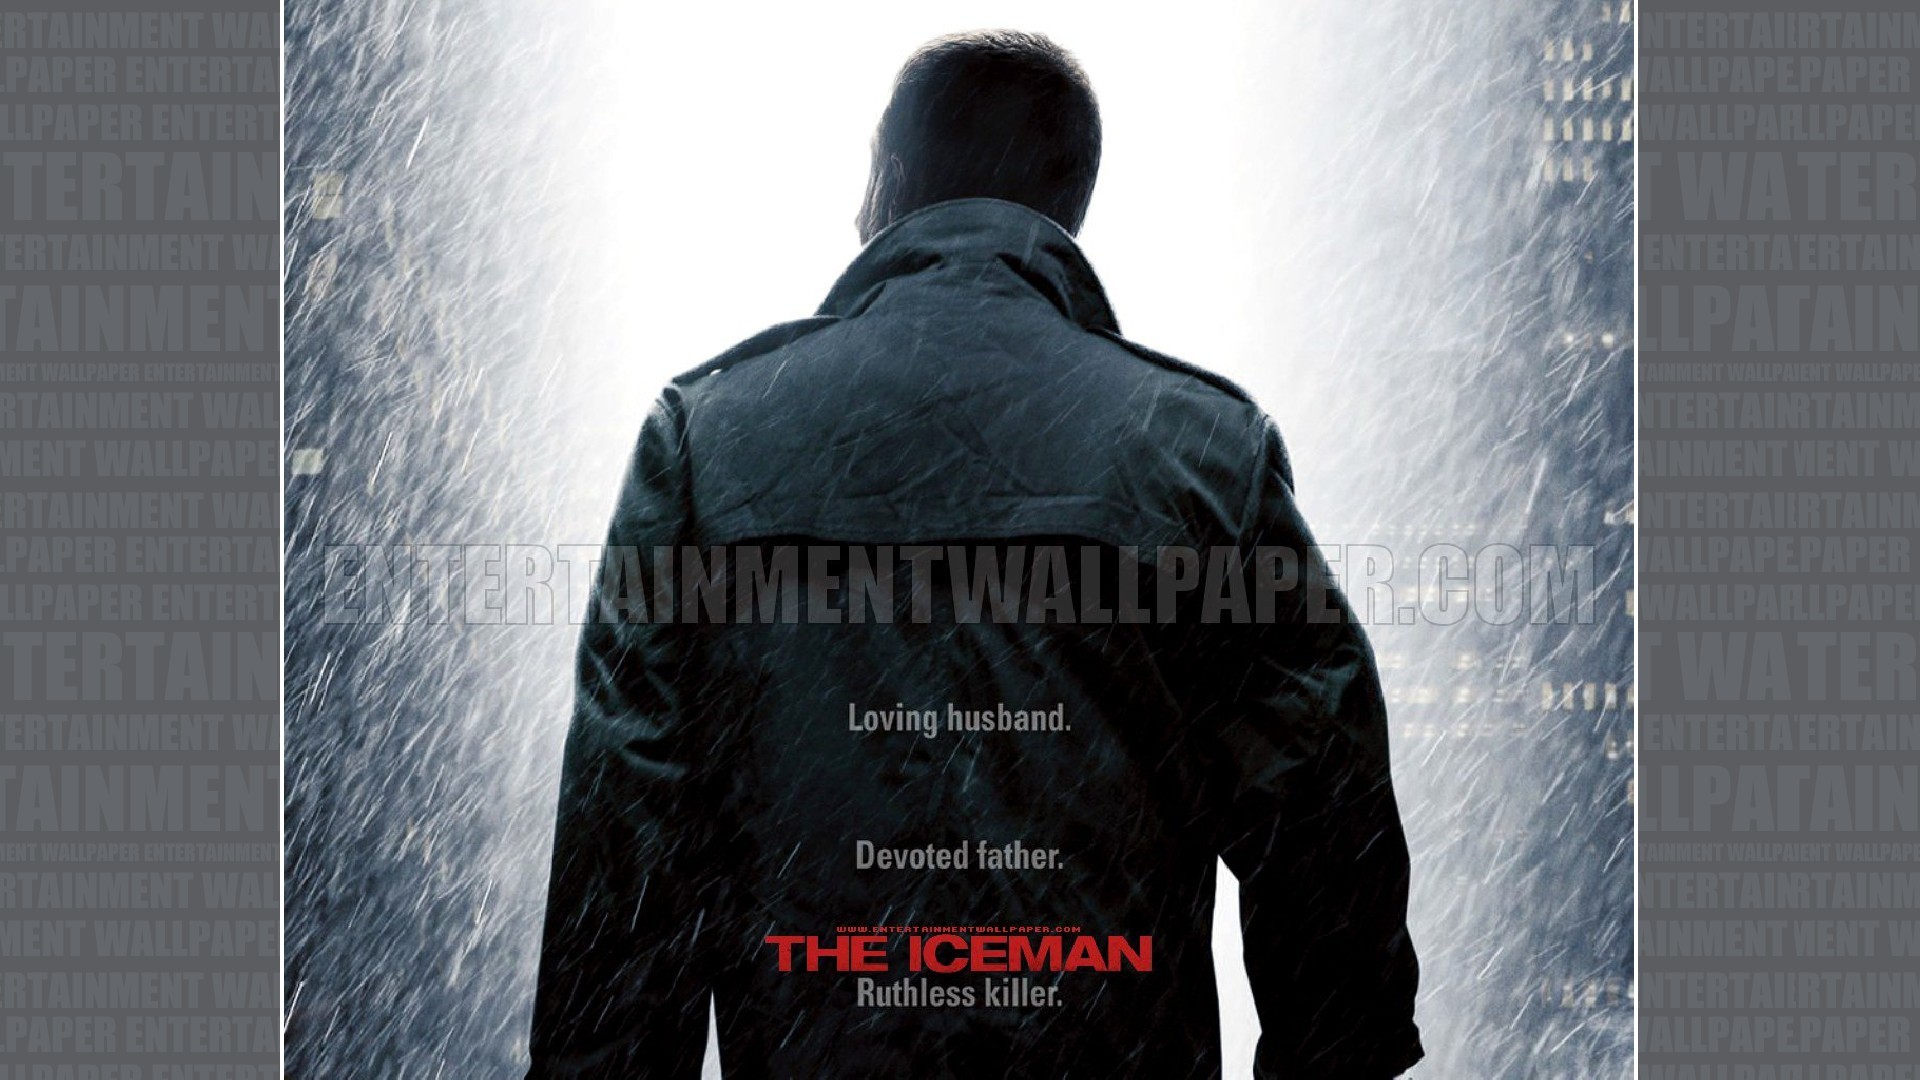 1920x1080 The Iceman Wallpaper - Original size, download now.